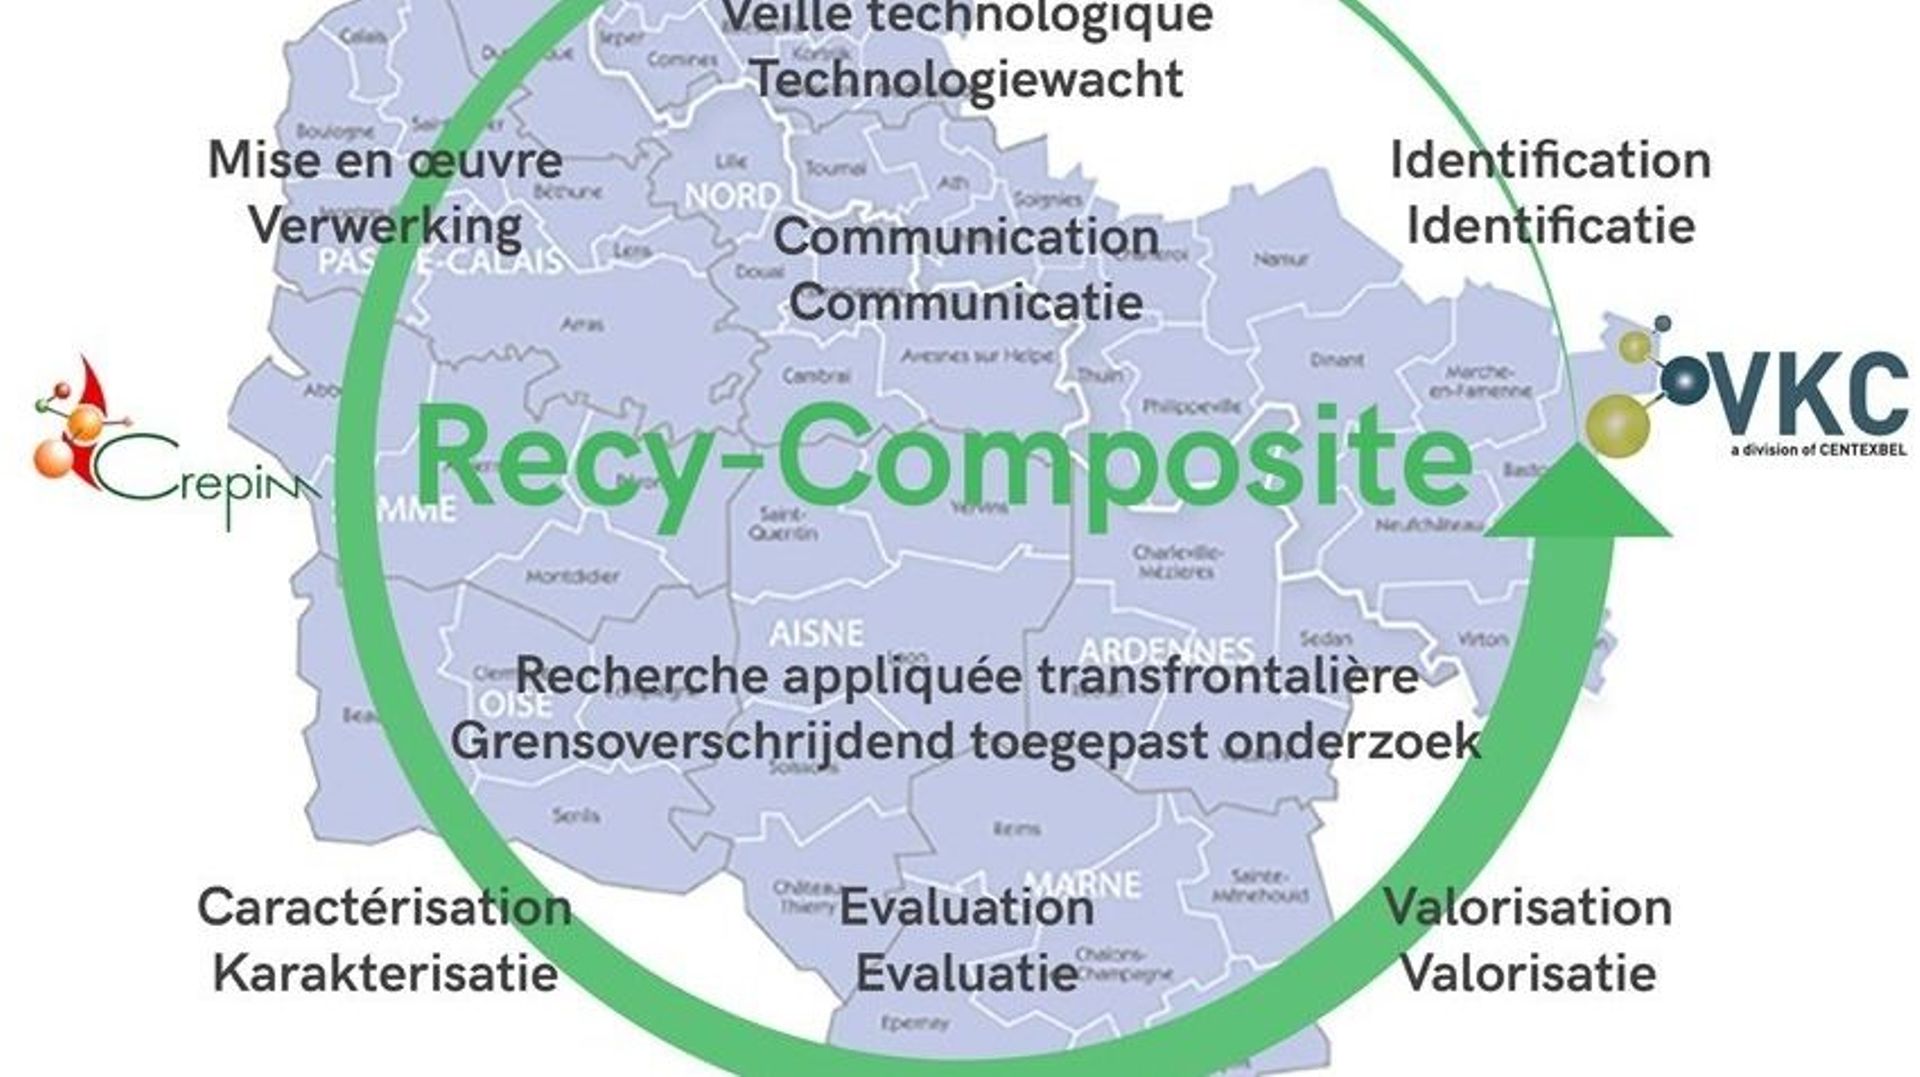 Recy-composite 